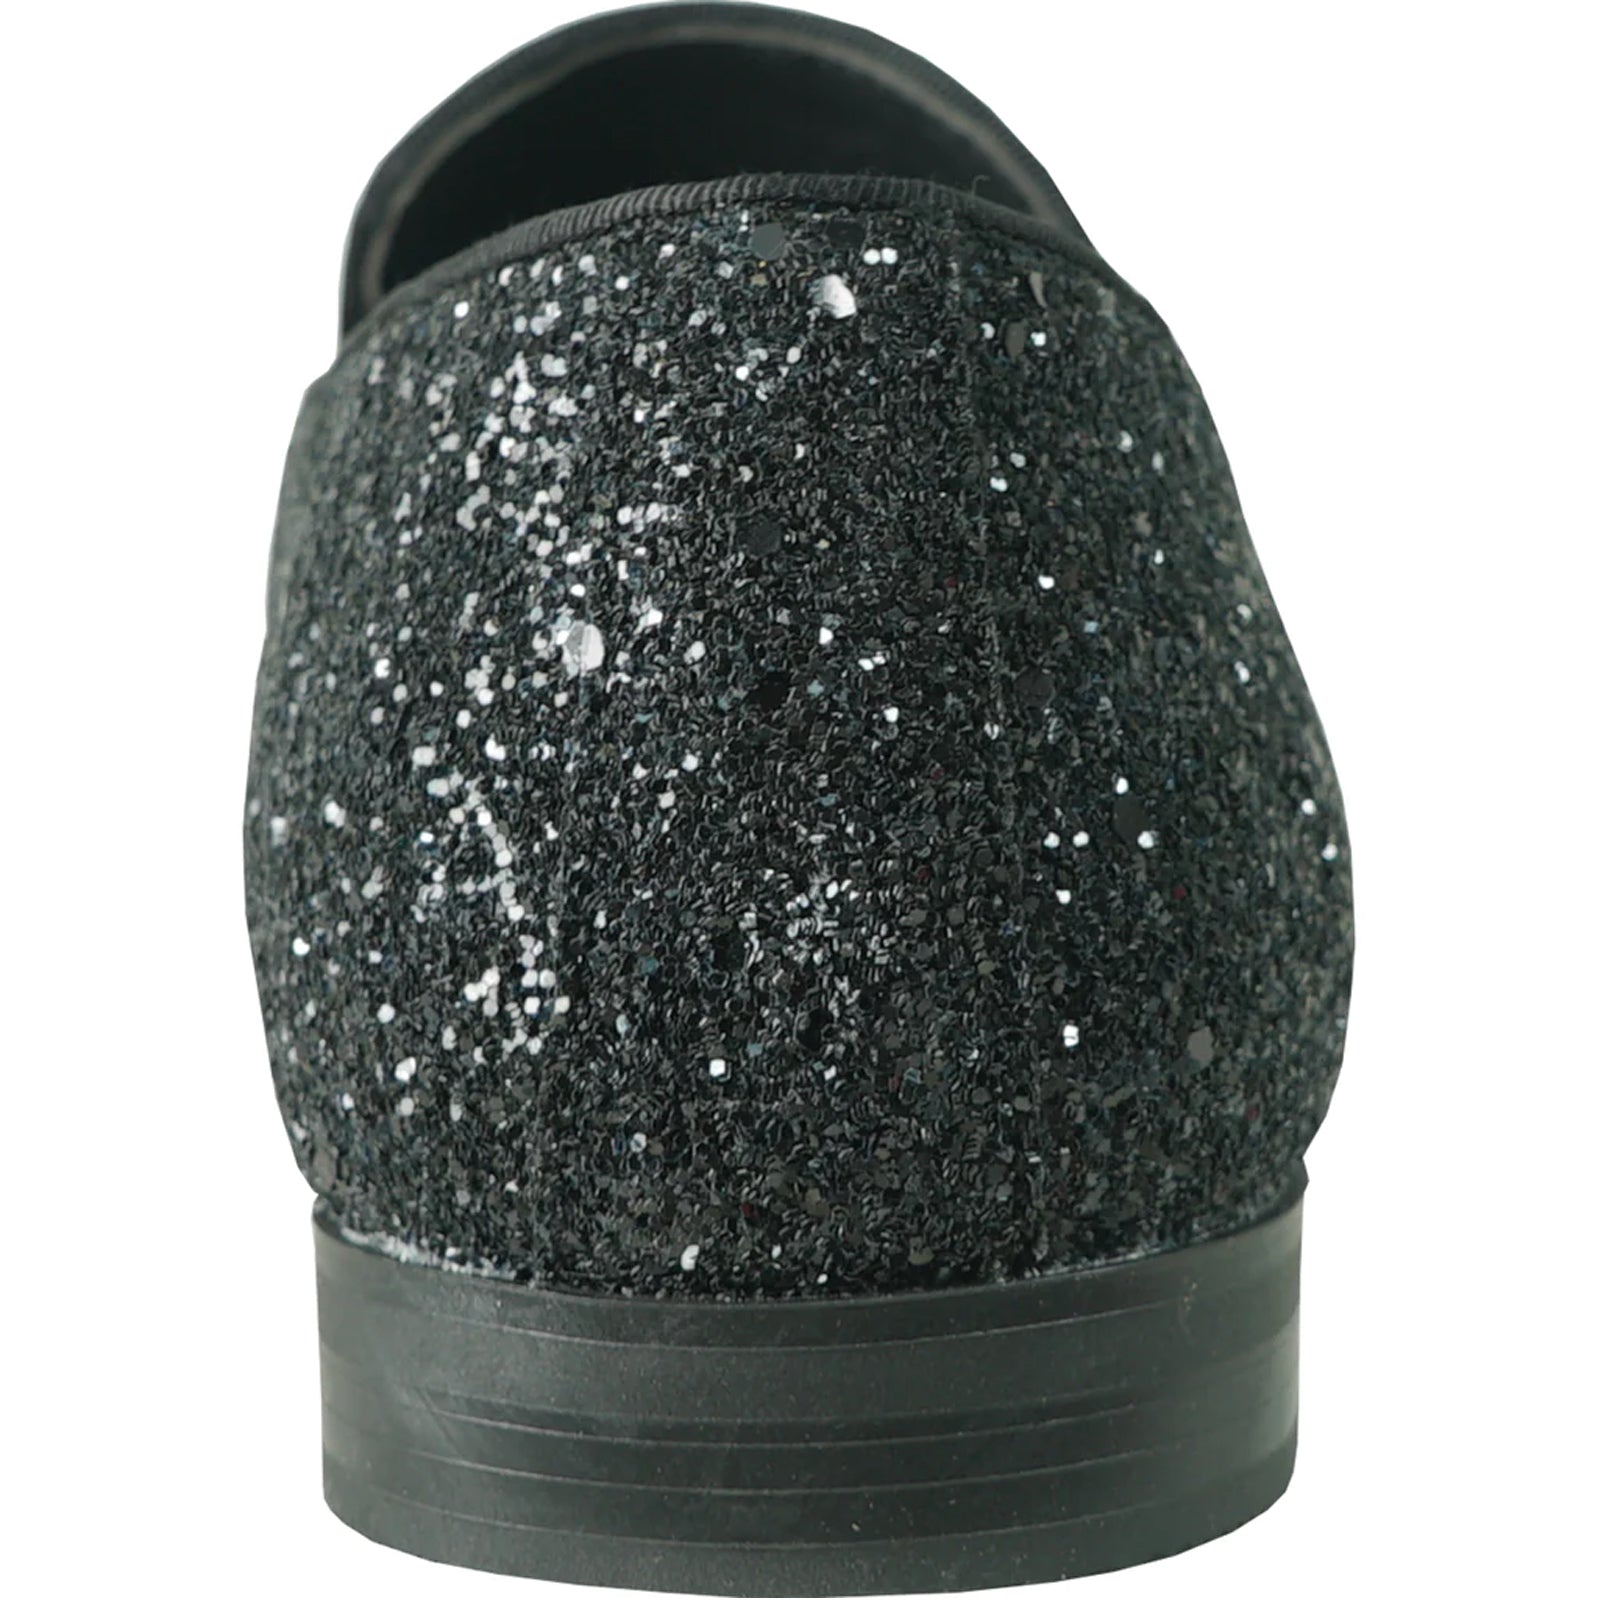 "Black Sequin Prom Tuxedo Loafers - Modern Men's Glitter Buckle Shoes"